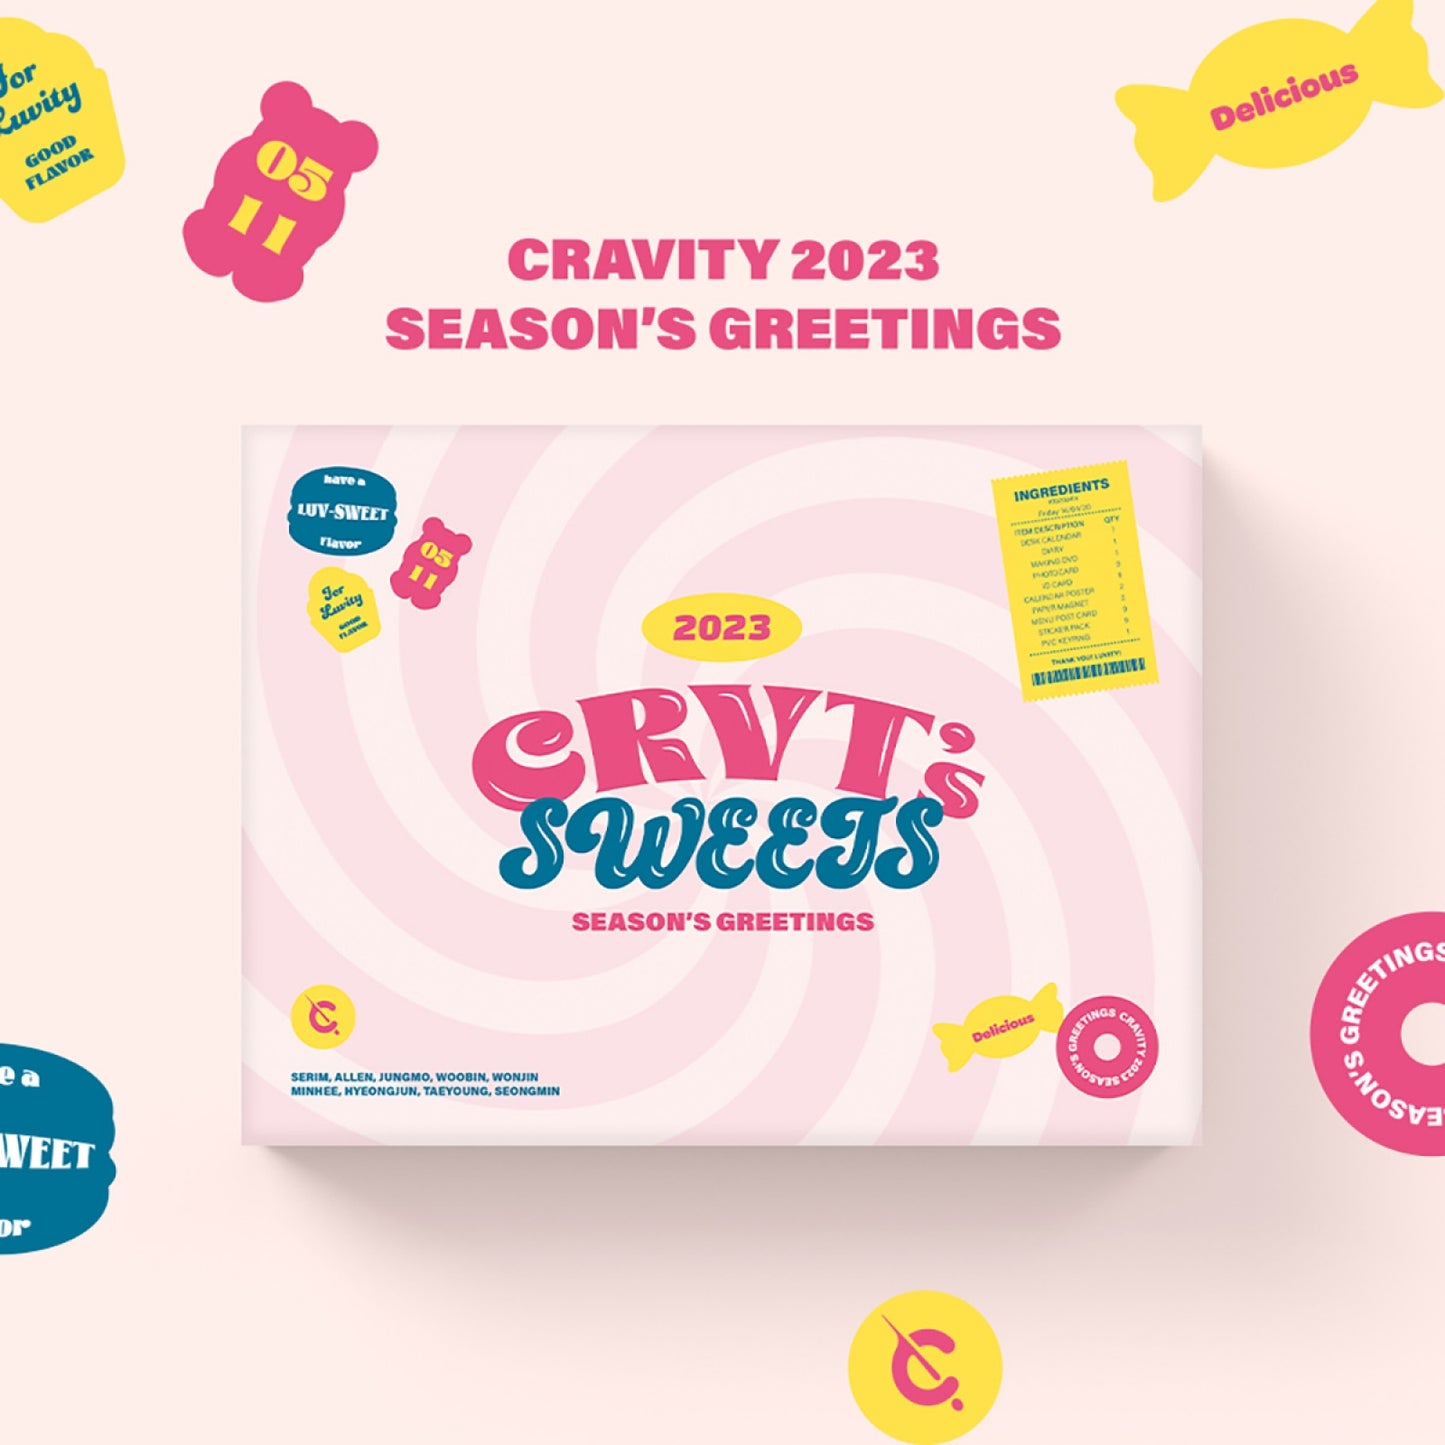 CRAVITY | 2023 SEASON'S GREETINGS - CRVT's SWEETS